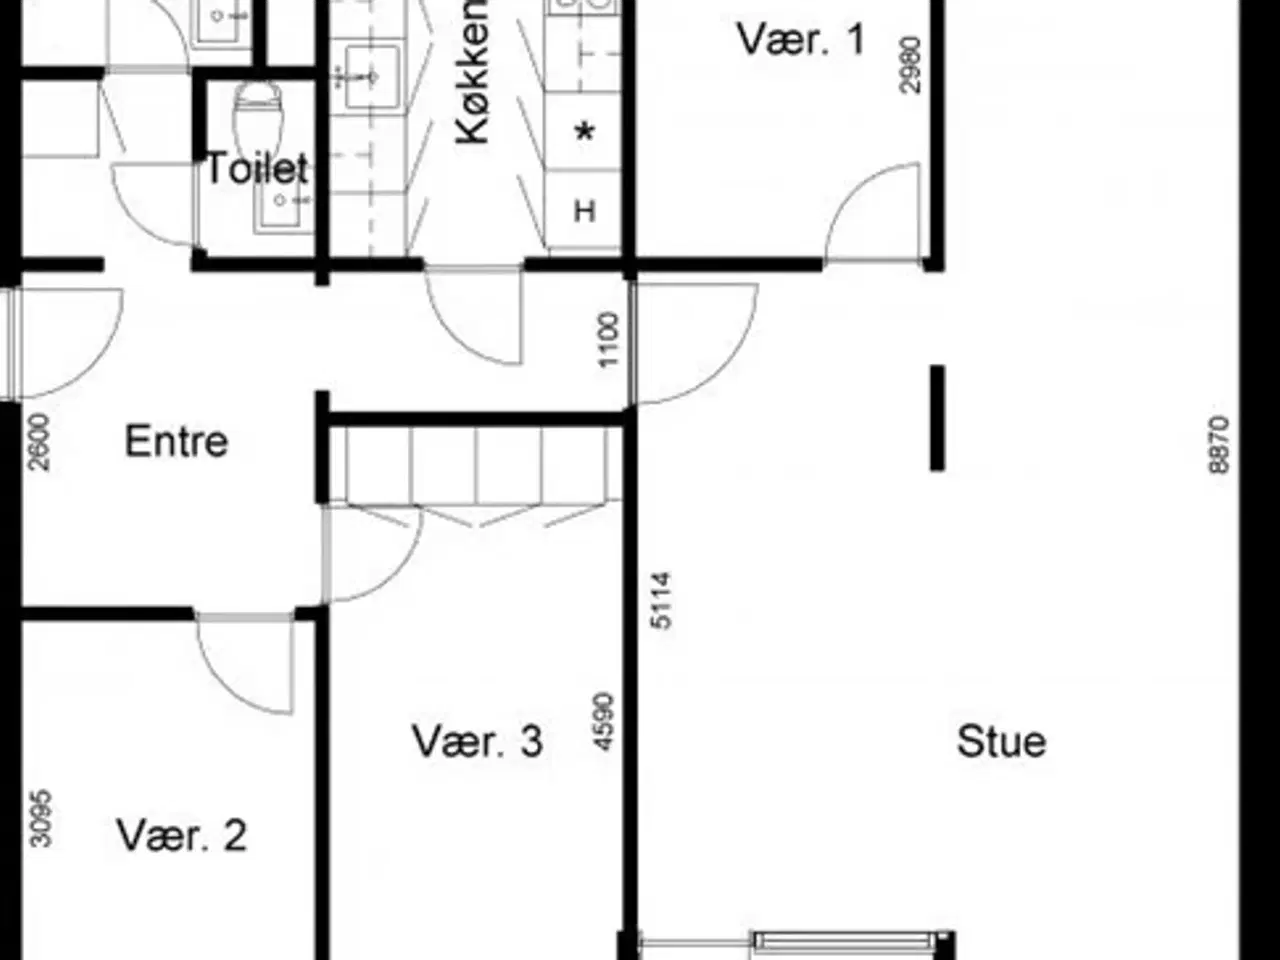 Billede 1 - Holstebrovej, 93 m2, 4 værelser, 6.665 kr., Skive, Viborg